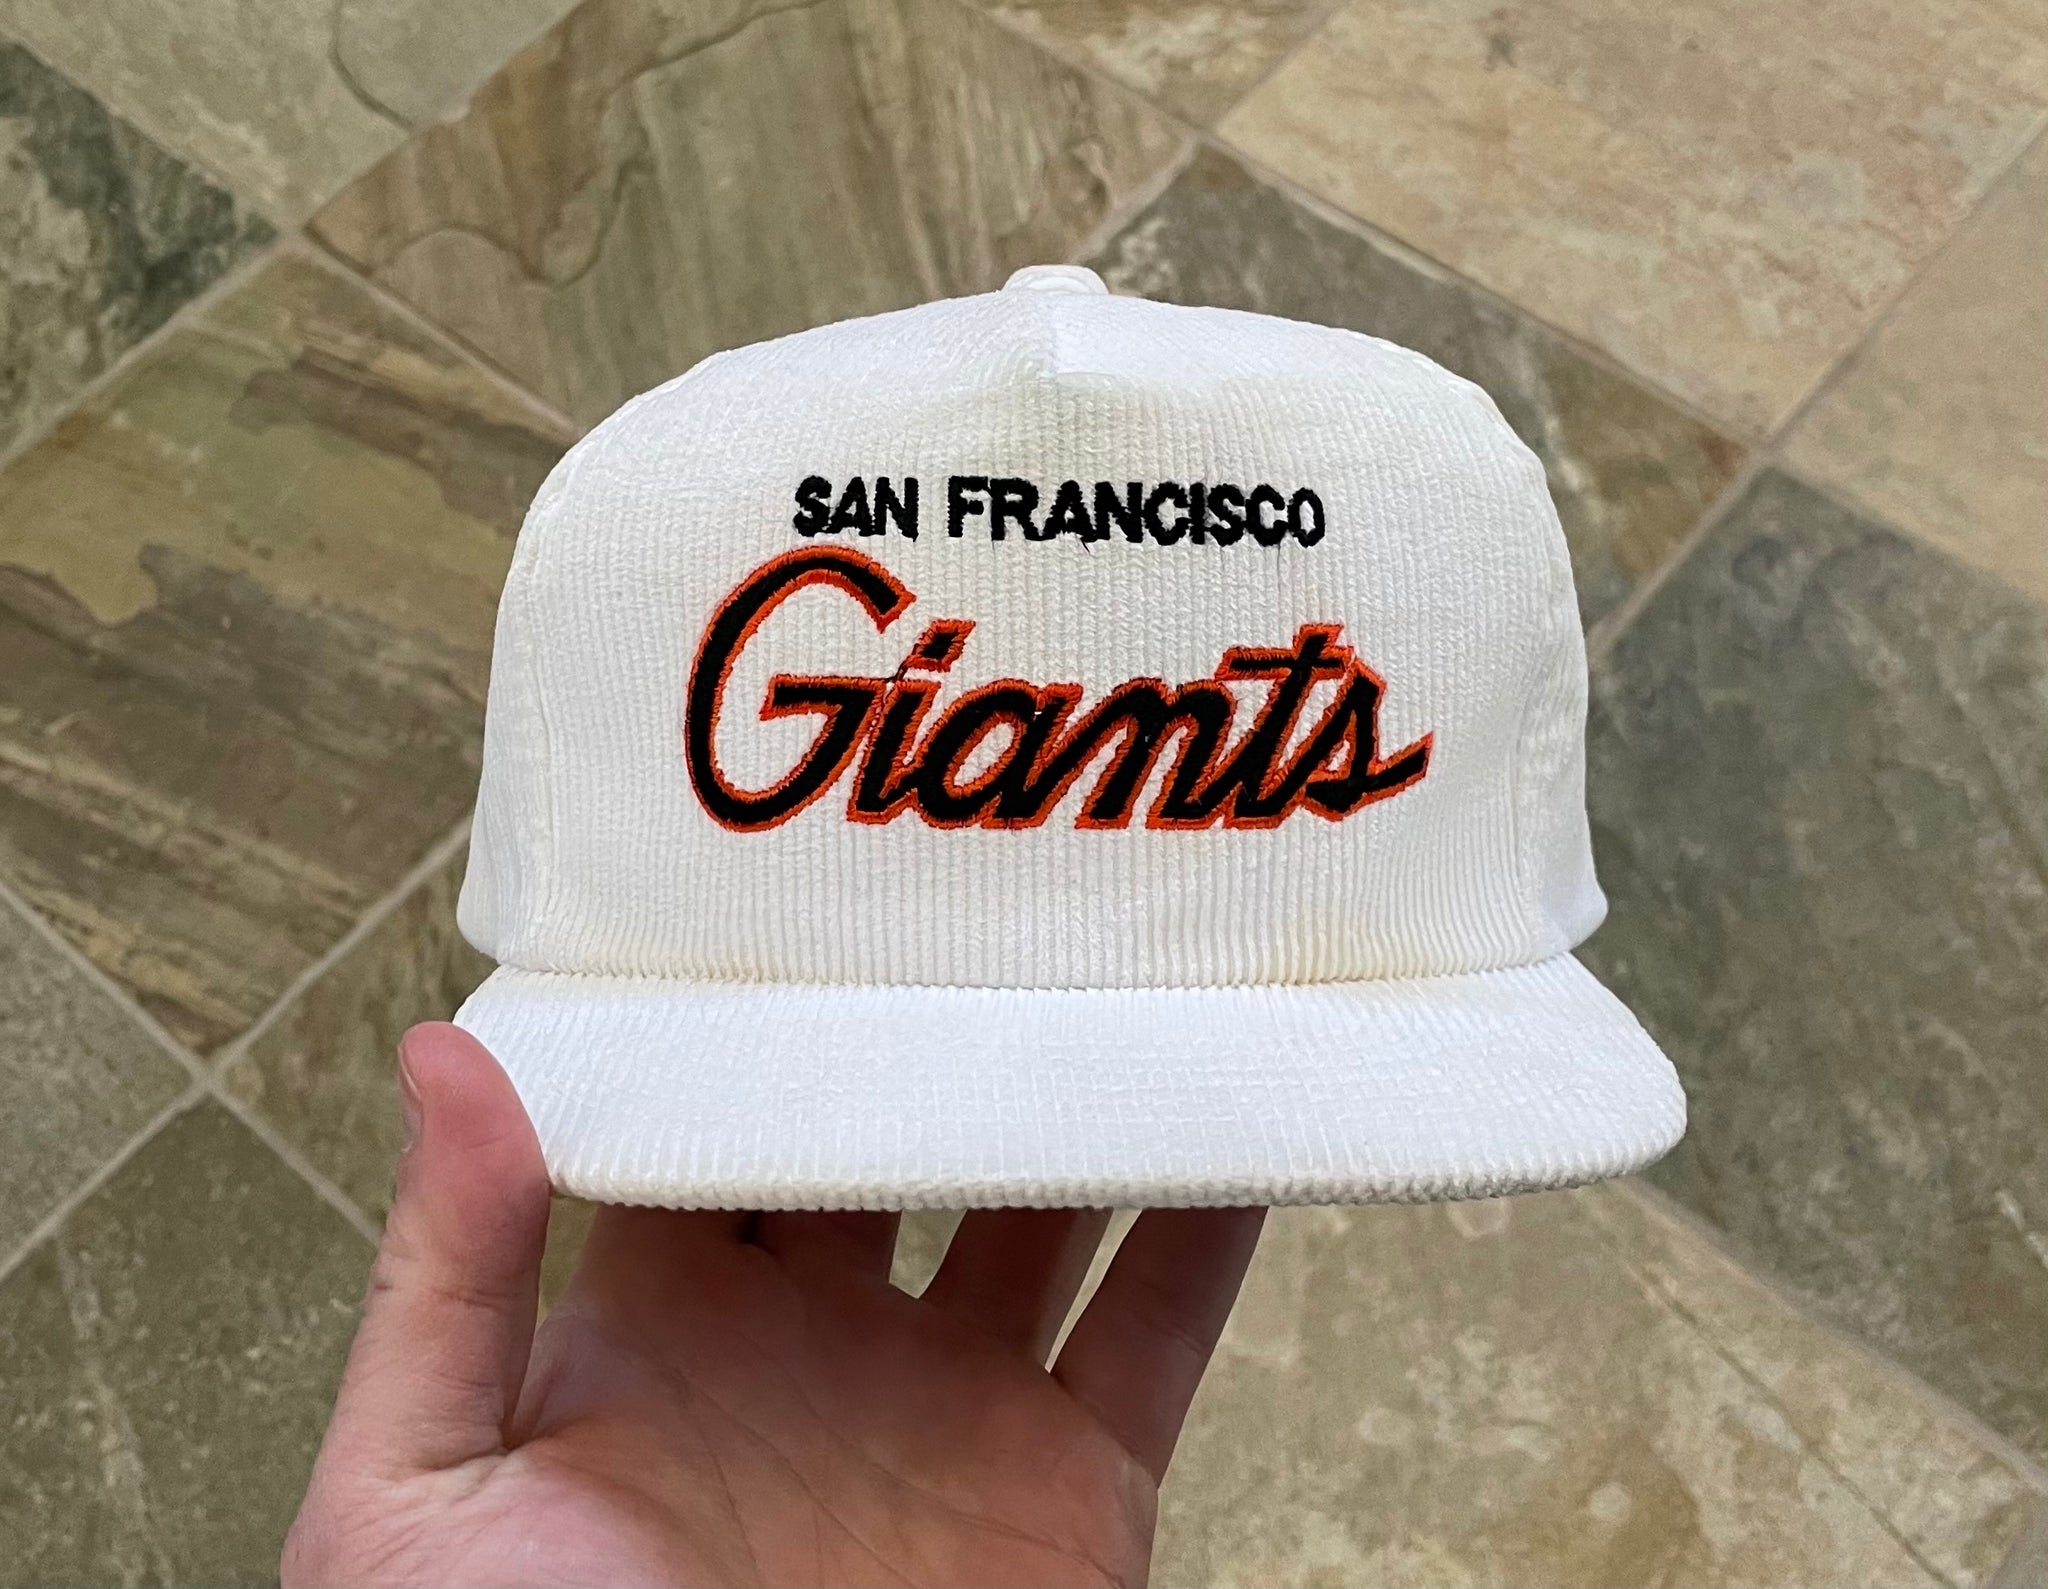 OG logo San Francisco (SF) high quality snapback vintage cap by